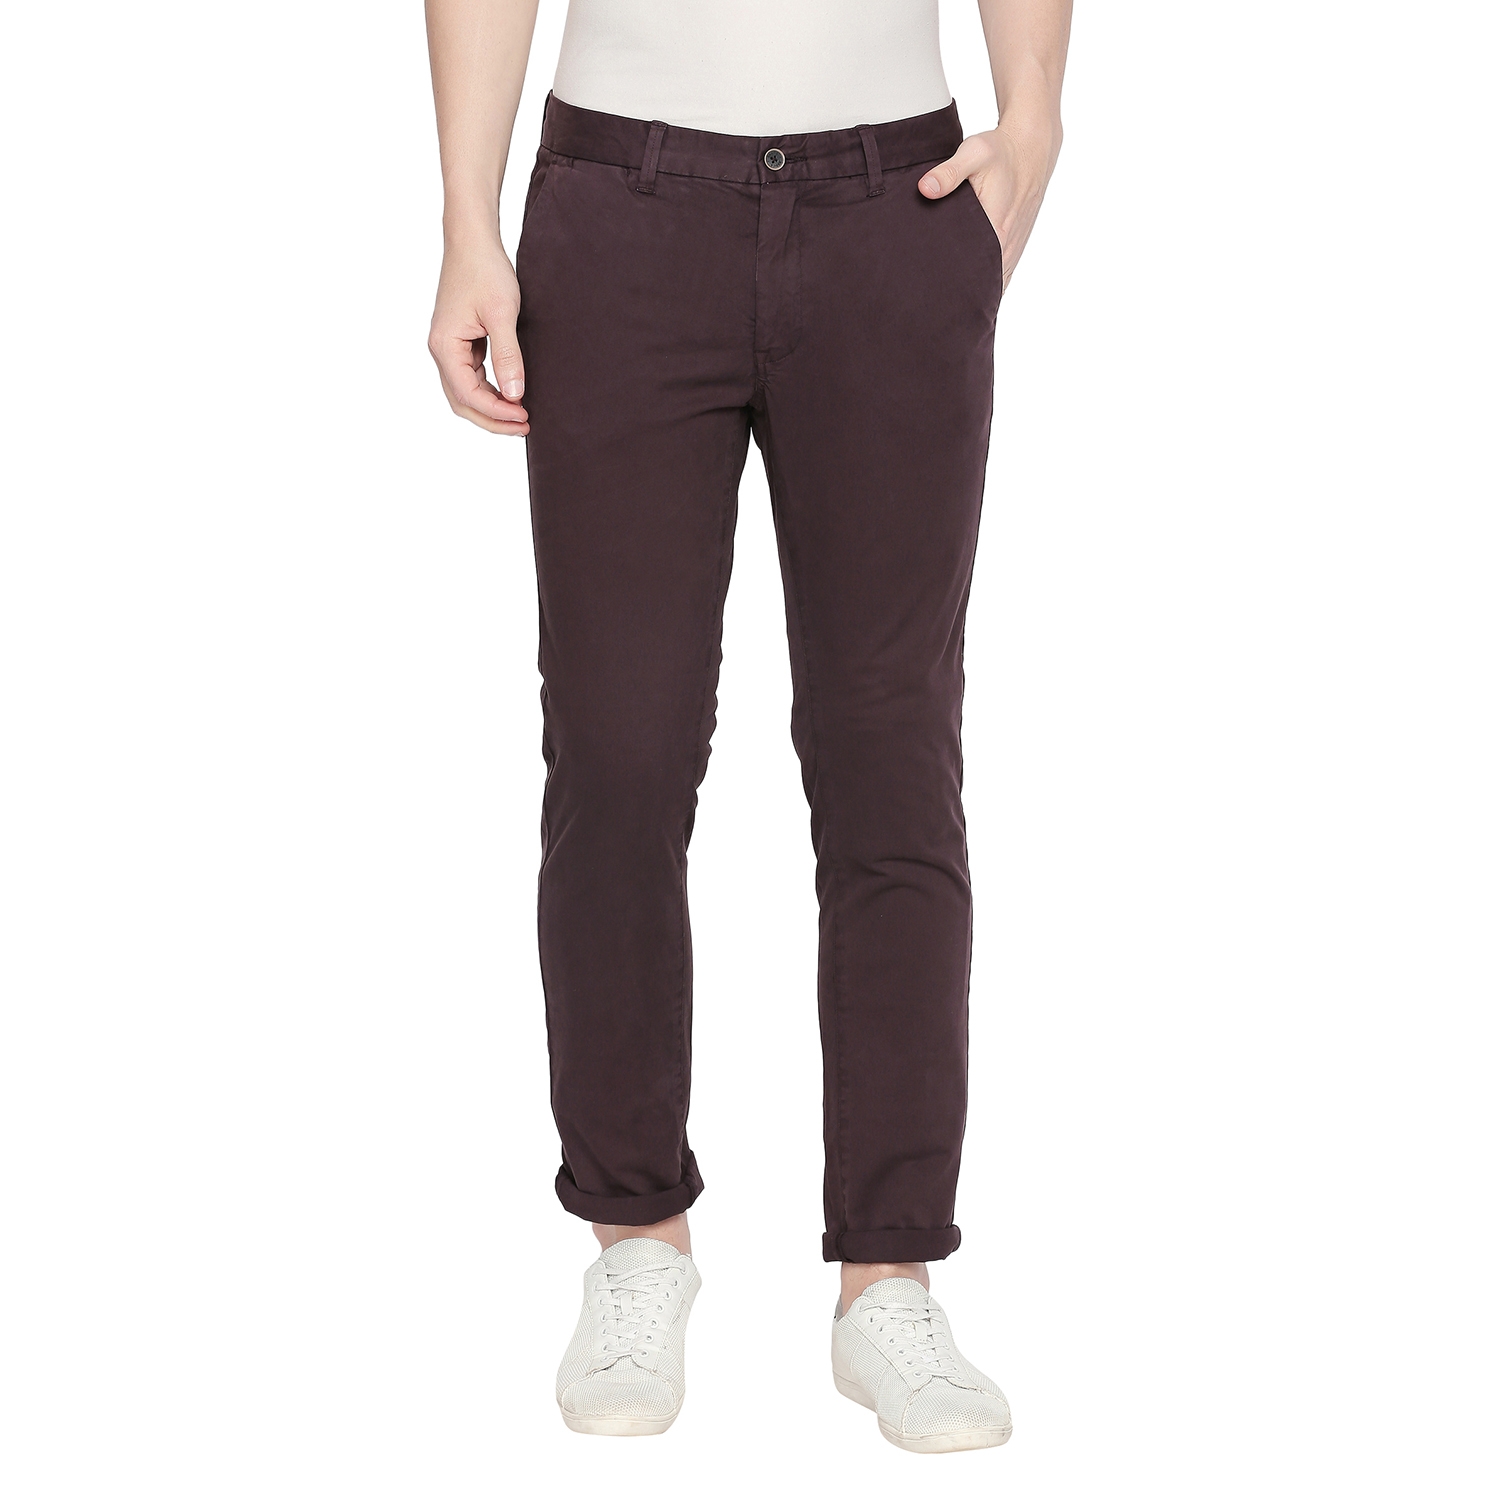 Basics | Men's Maroon Cotton Blend Solid Trouser 0